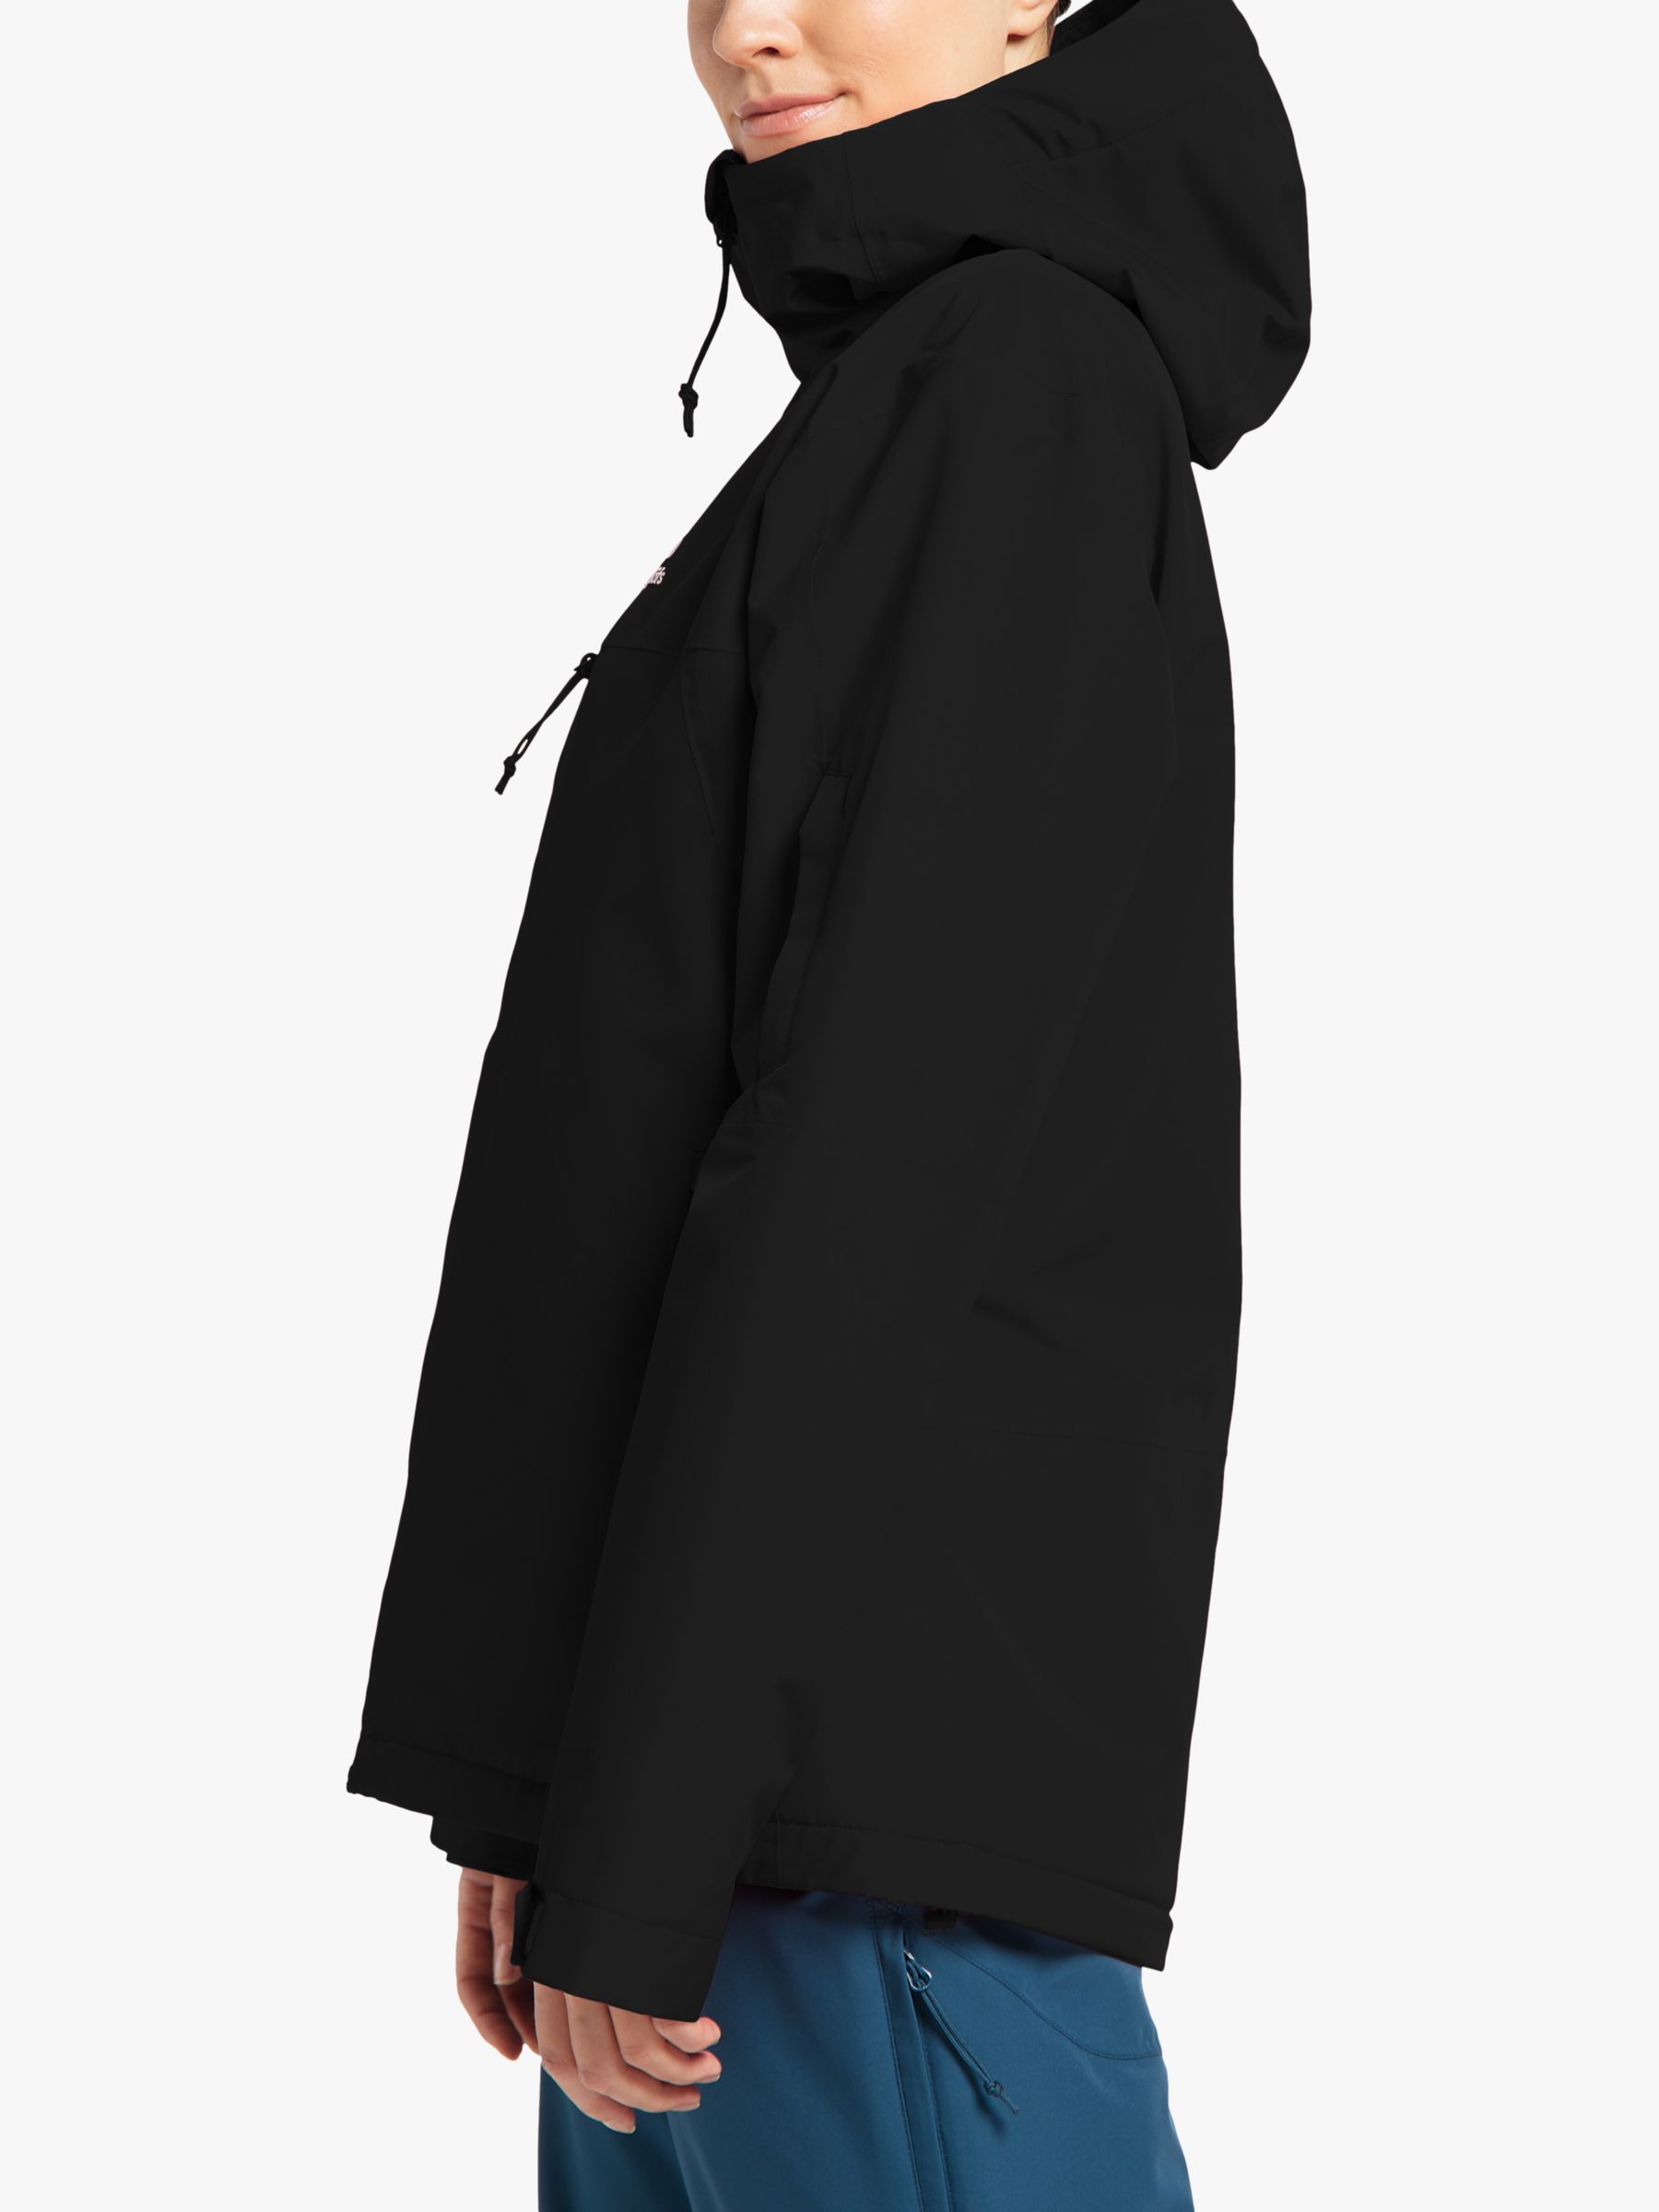 Haglöfs Gondol Women's Recycled Ski Jacket, True Black, XS